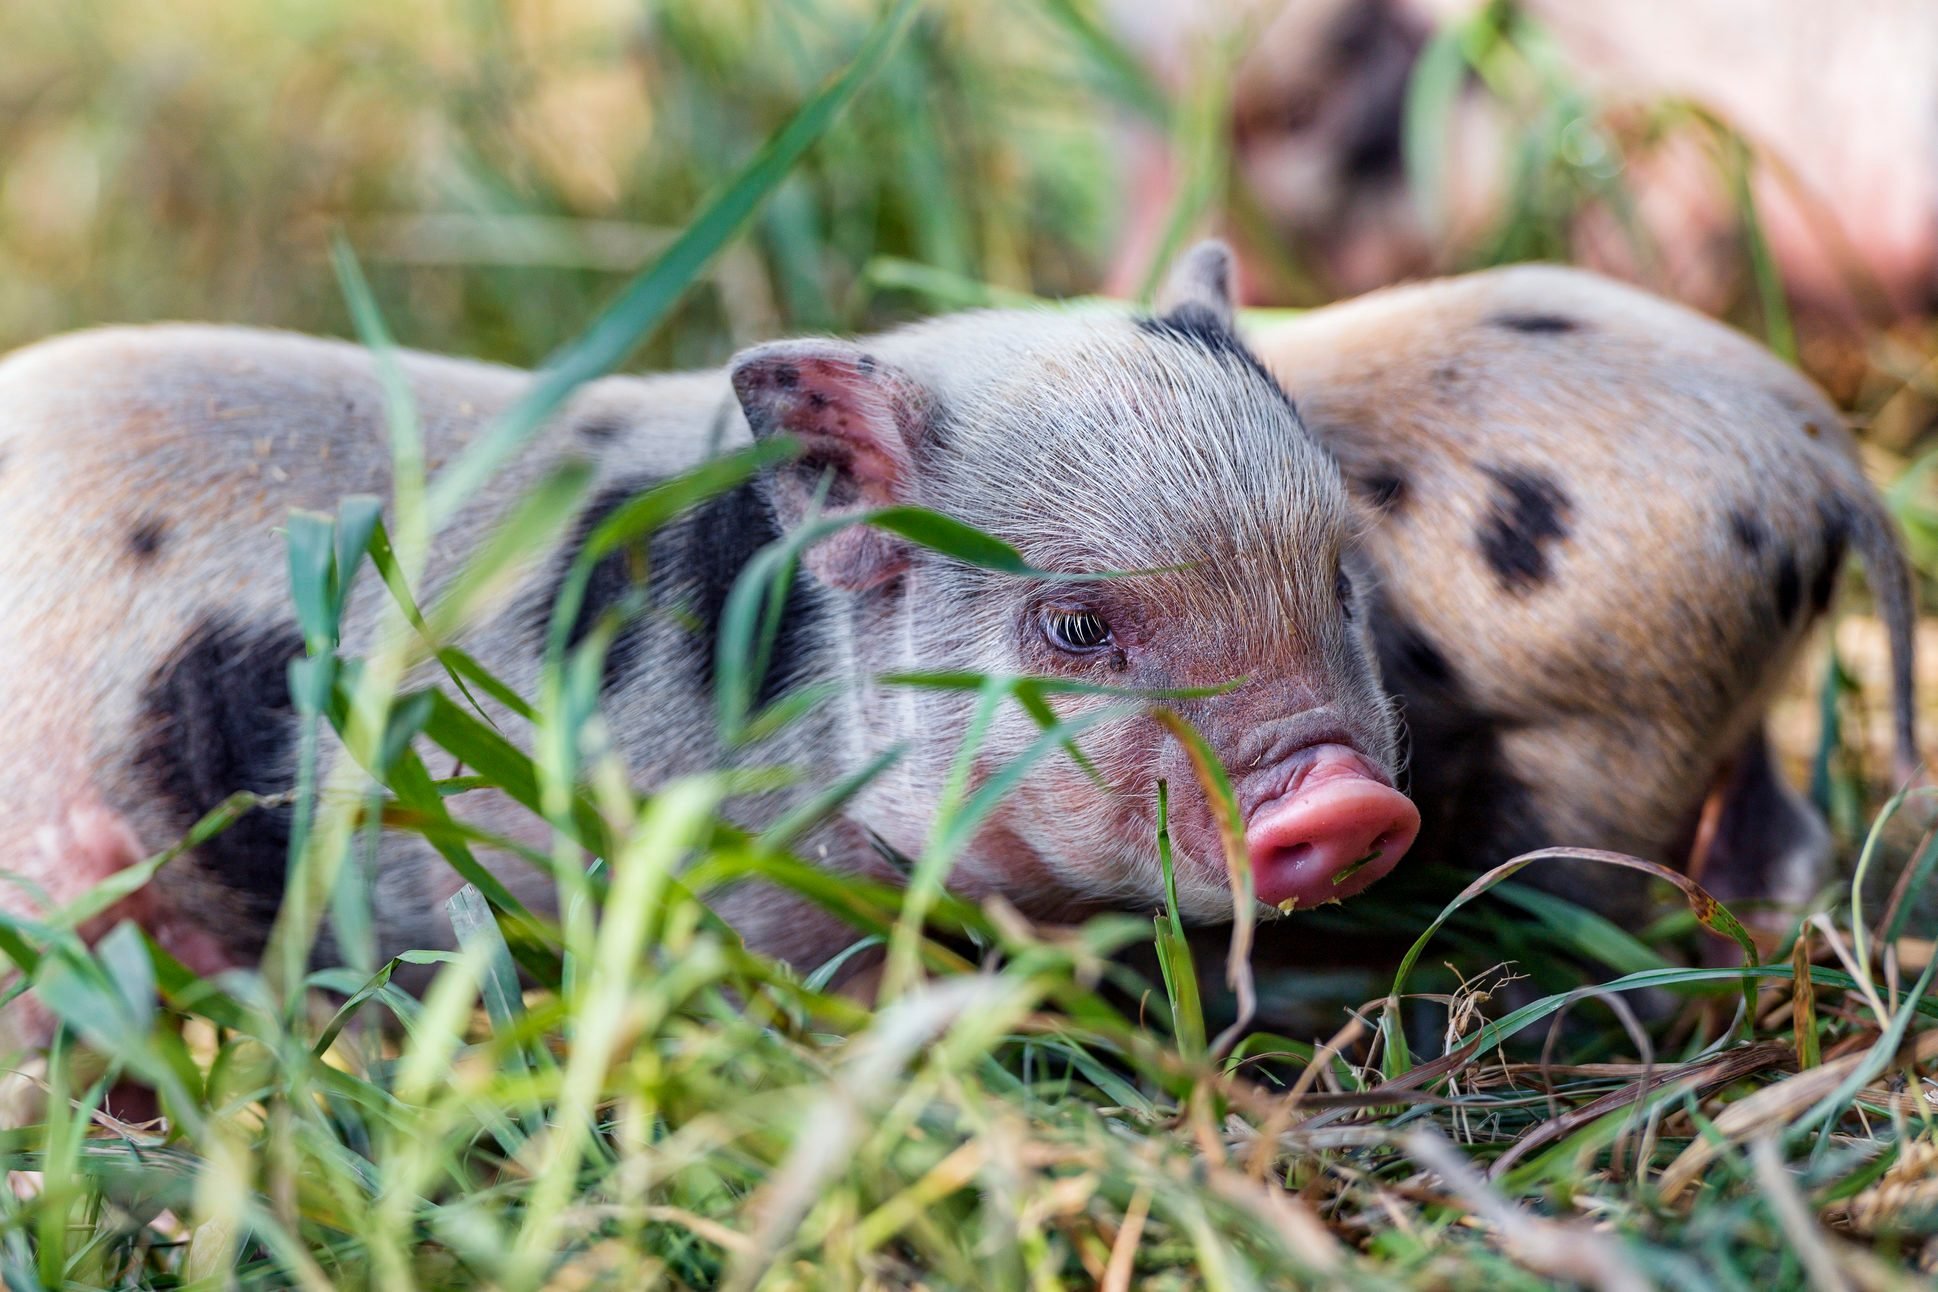 40 Adorable Pig Pictures to Make You Smile | Reader's Digest